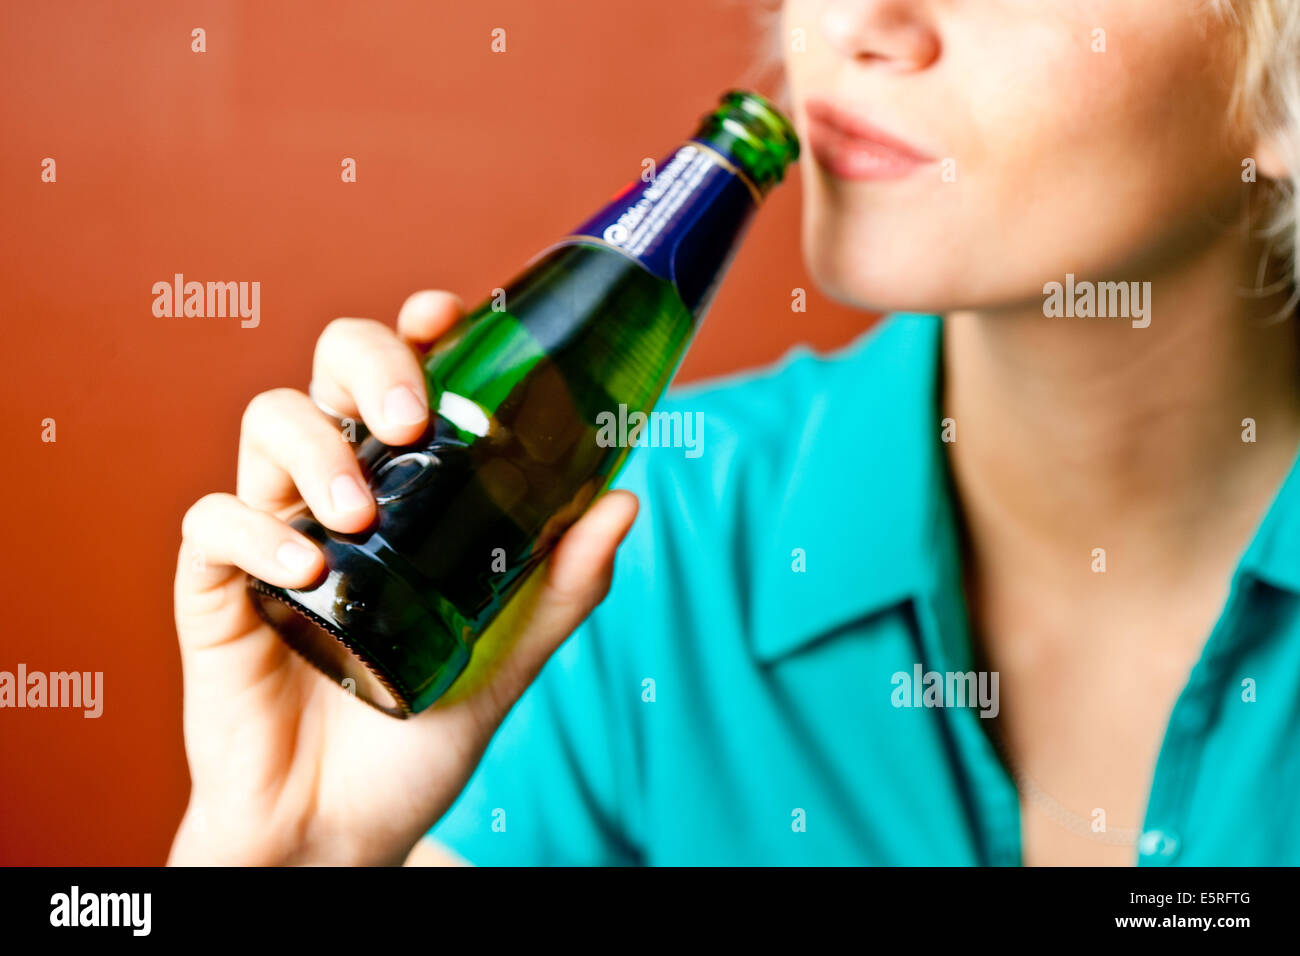 Teenage girl drinking alcohol. Stock Photo